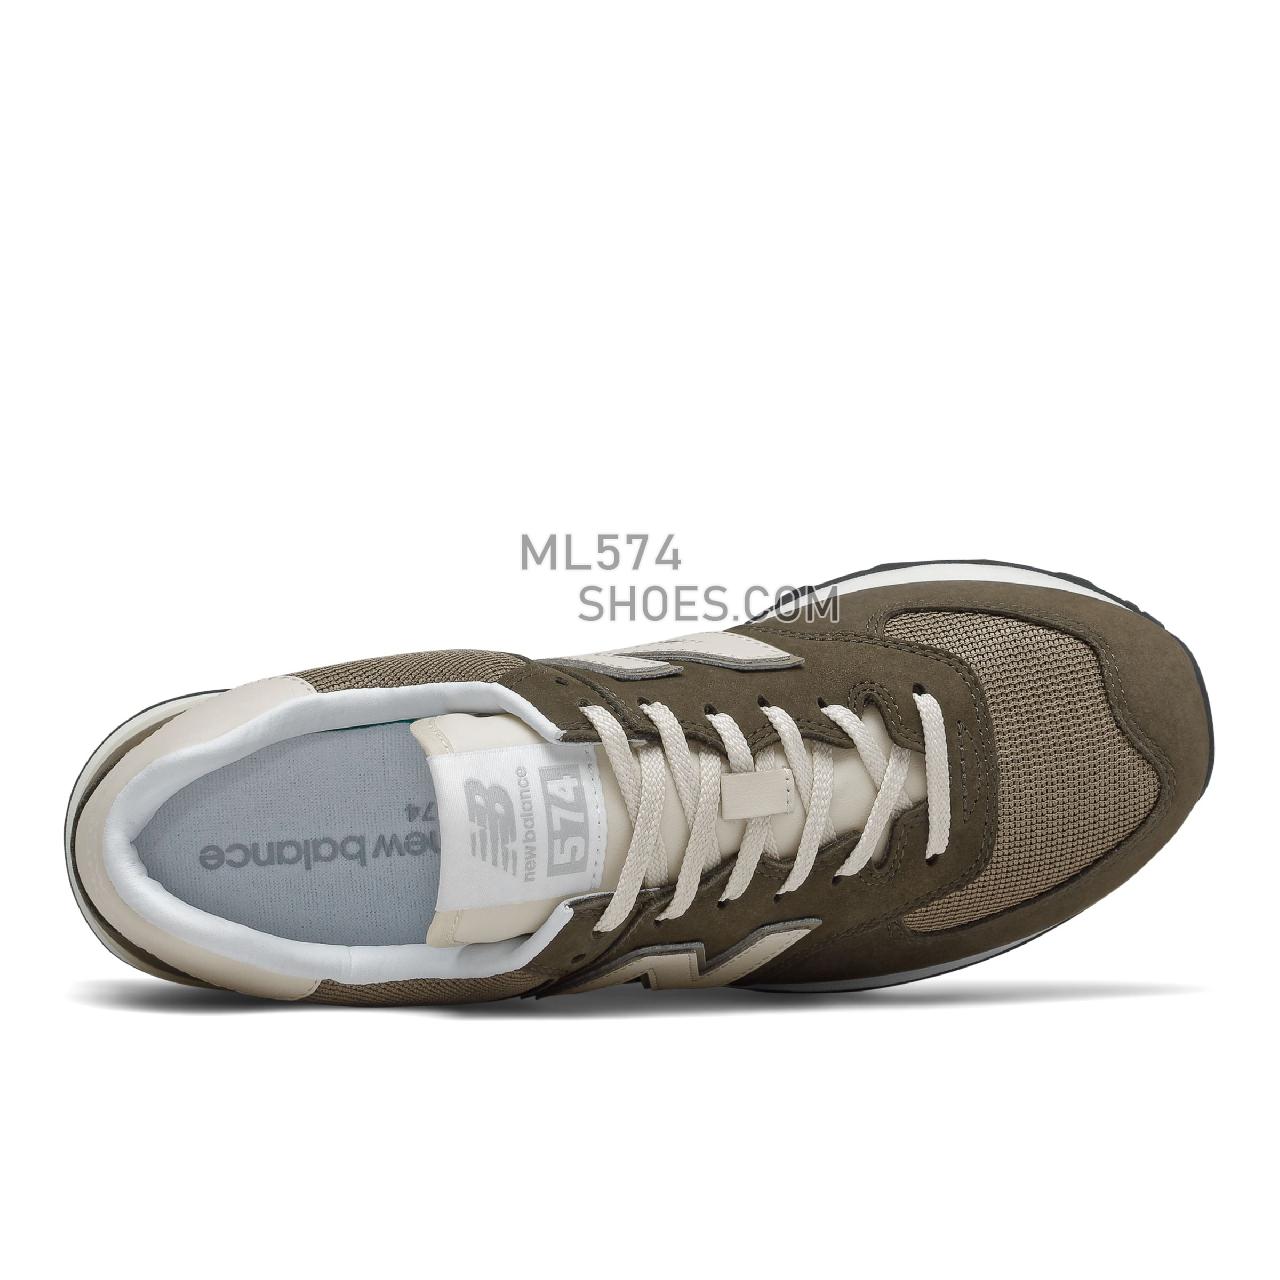 New Balance 574v2 - Men's Classic Sneakers - Black Olive with Mushroom - ML574SHP